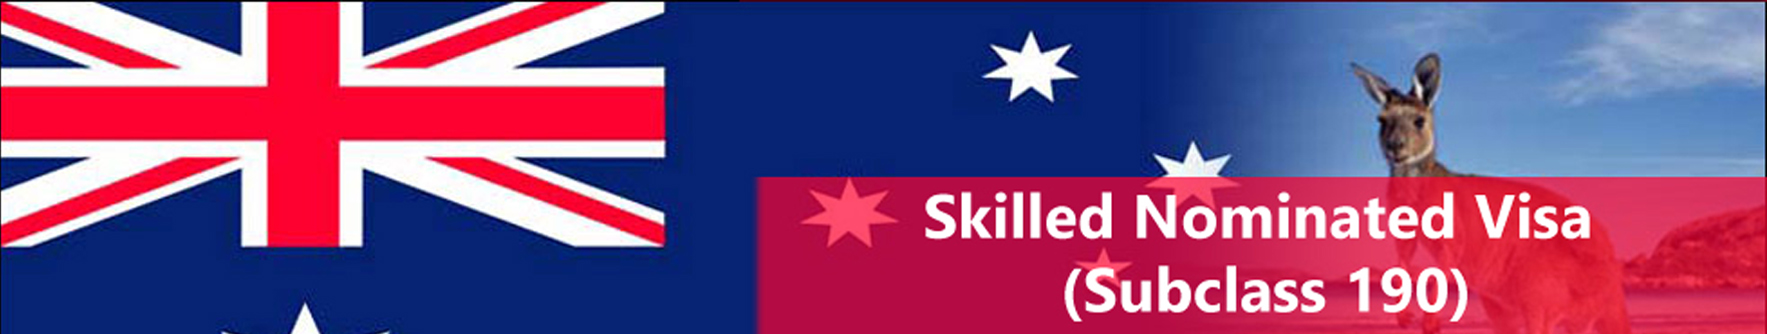 Australia Skilled Nominated Visa (Subclass 190)